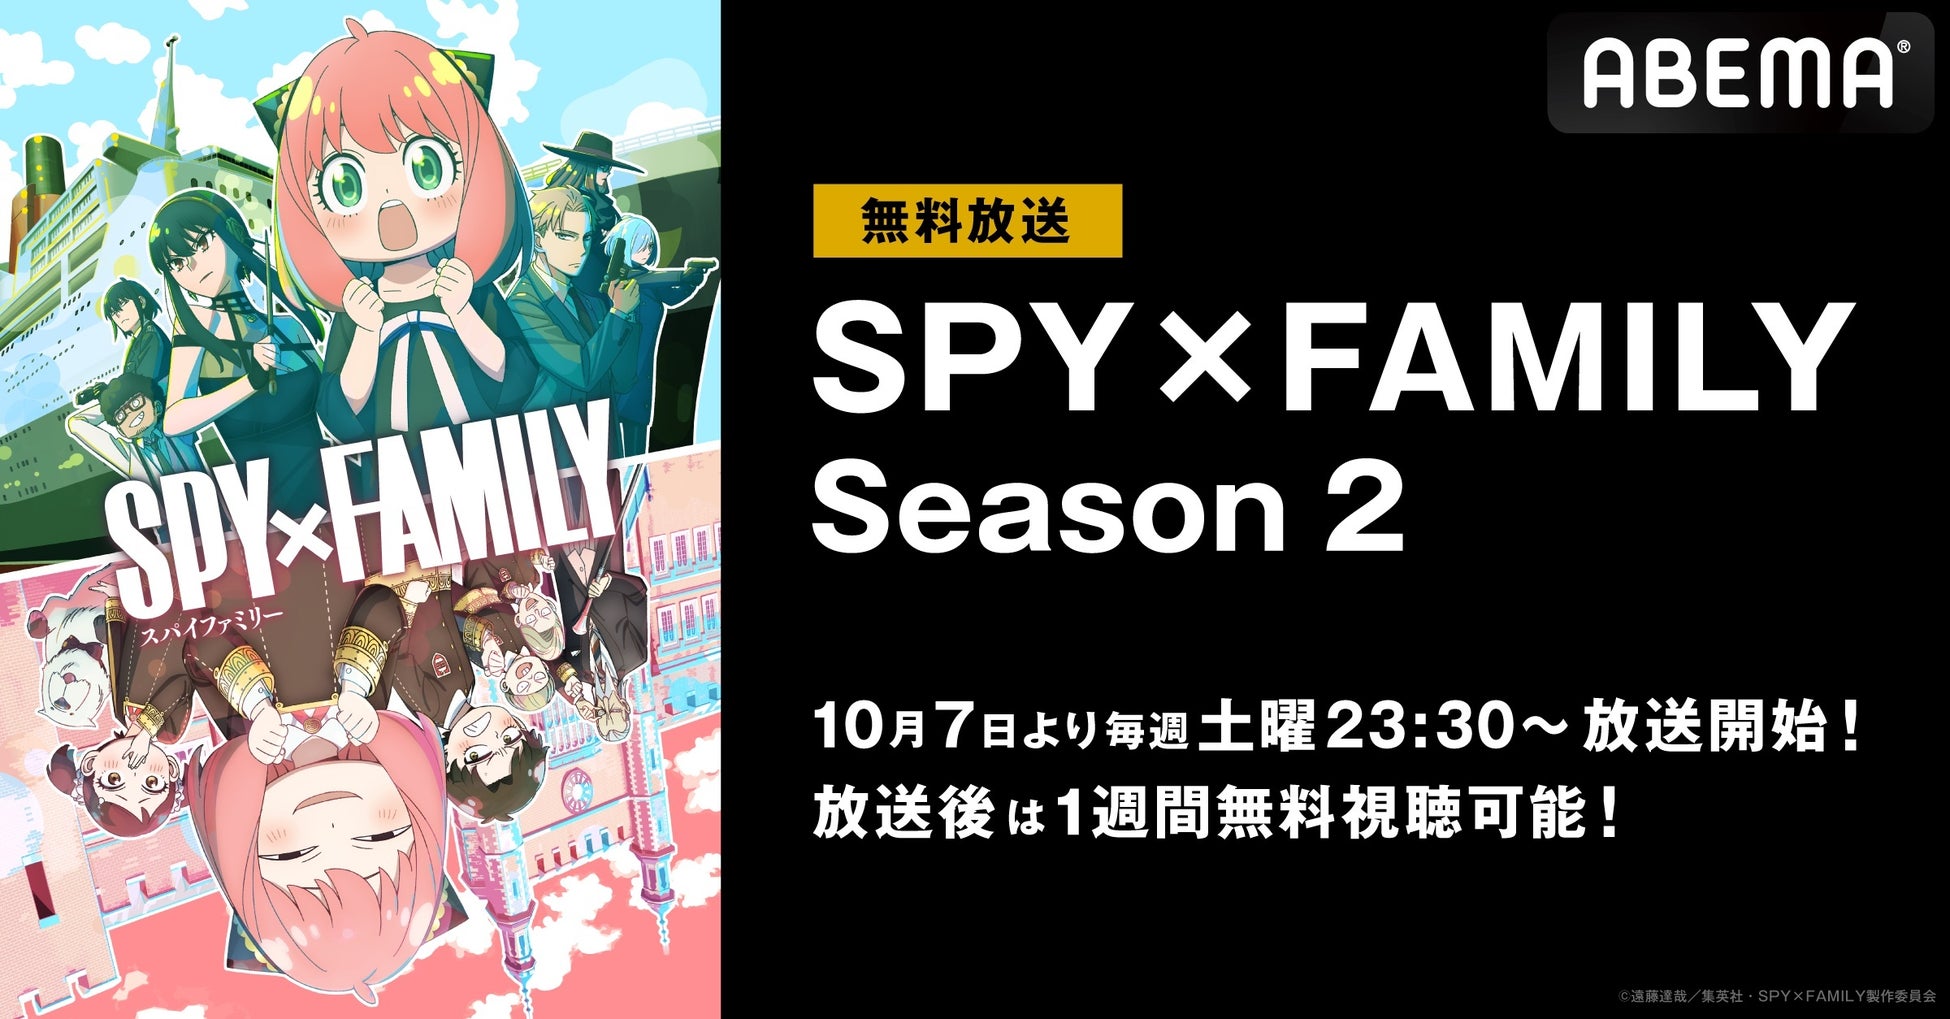 『SPY×FAMILY Season 2』が「ABEMA」で無料放送決定！初回は10月7日（土）夜11時30分よりスタート